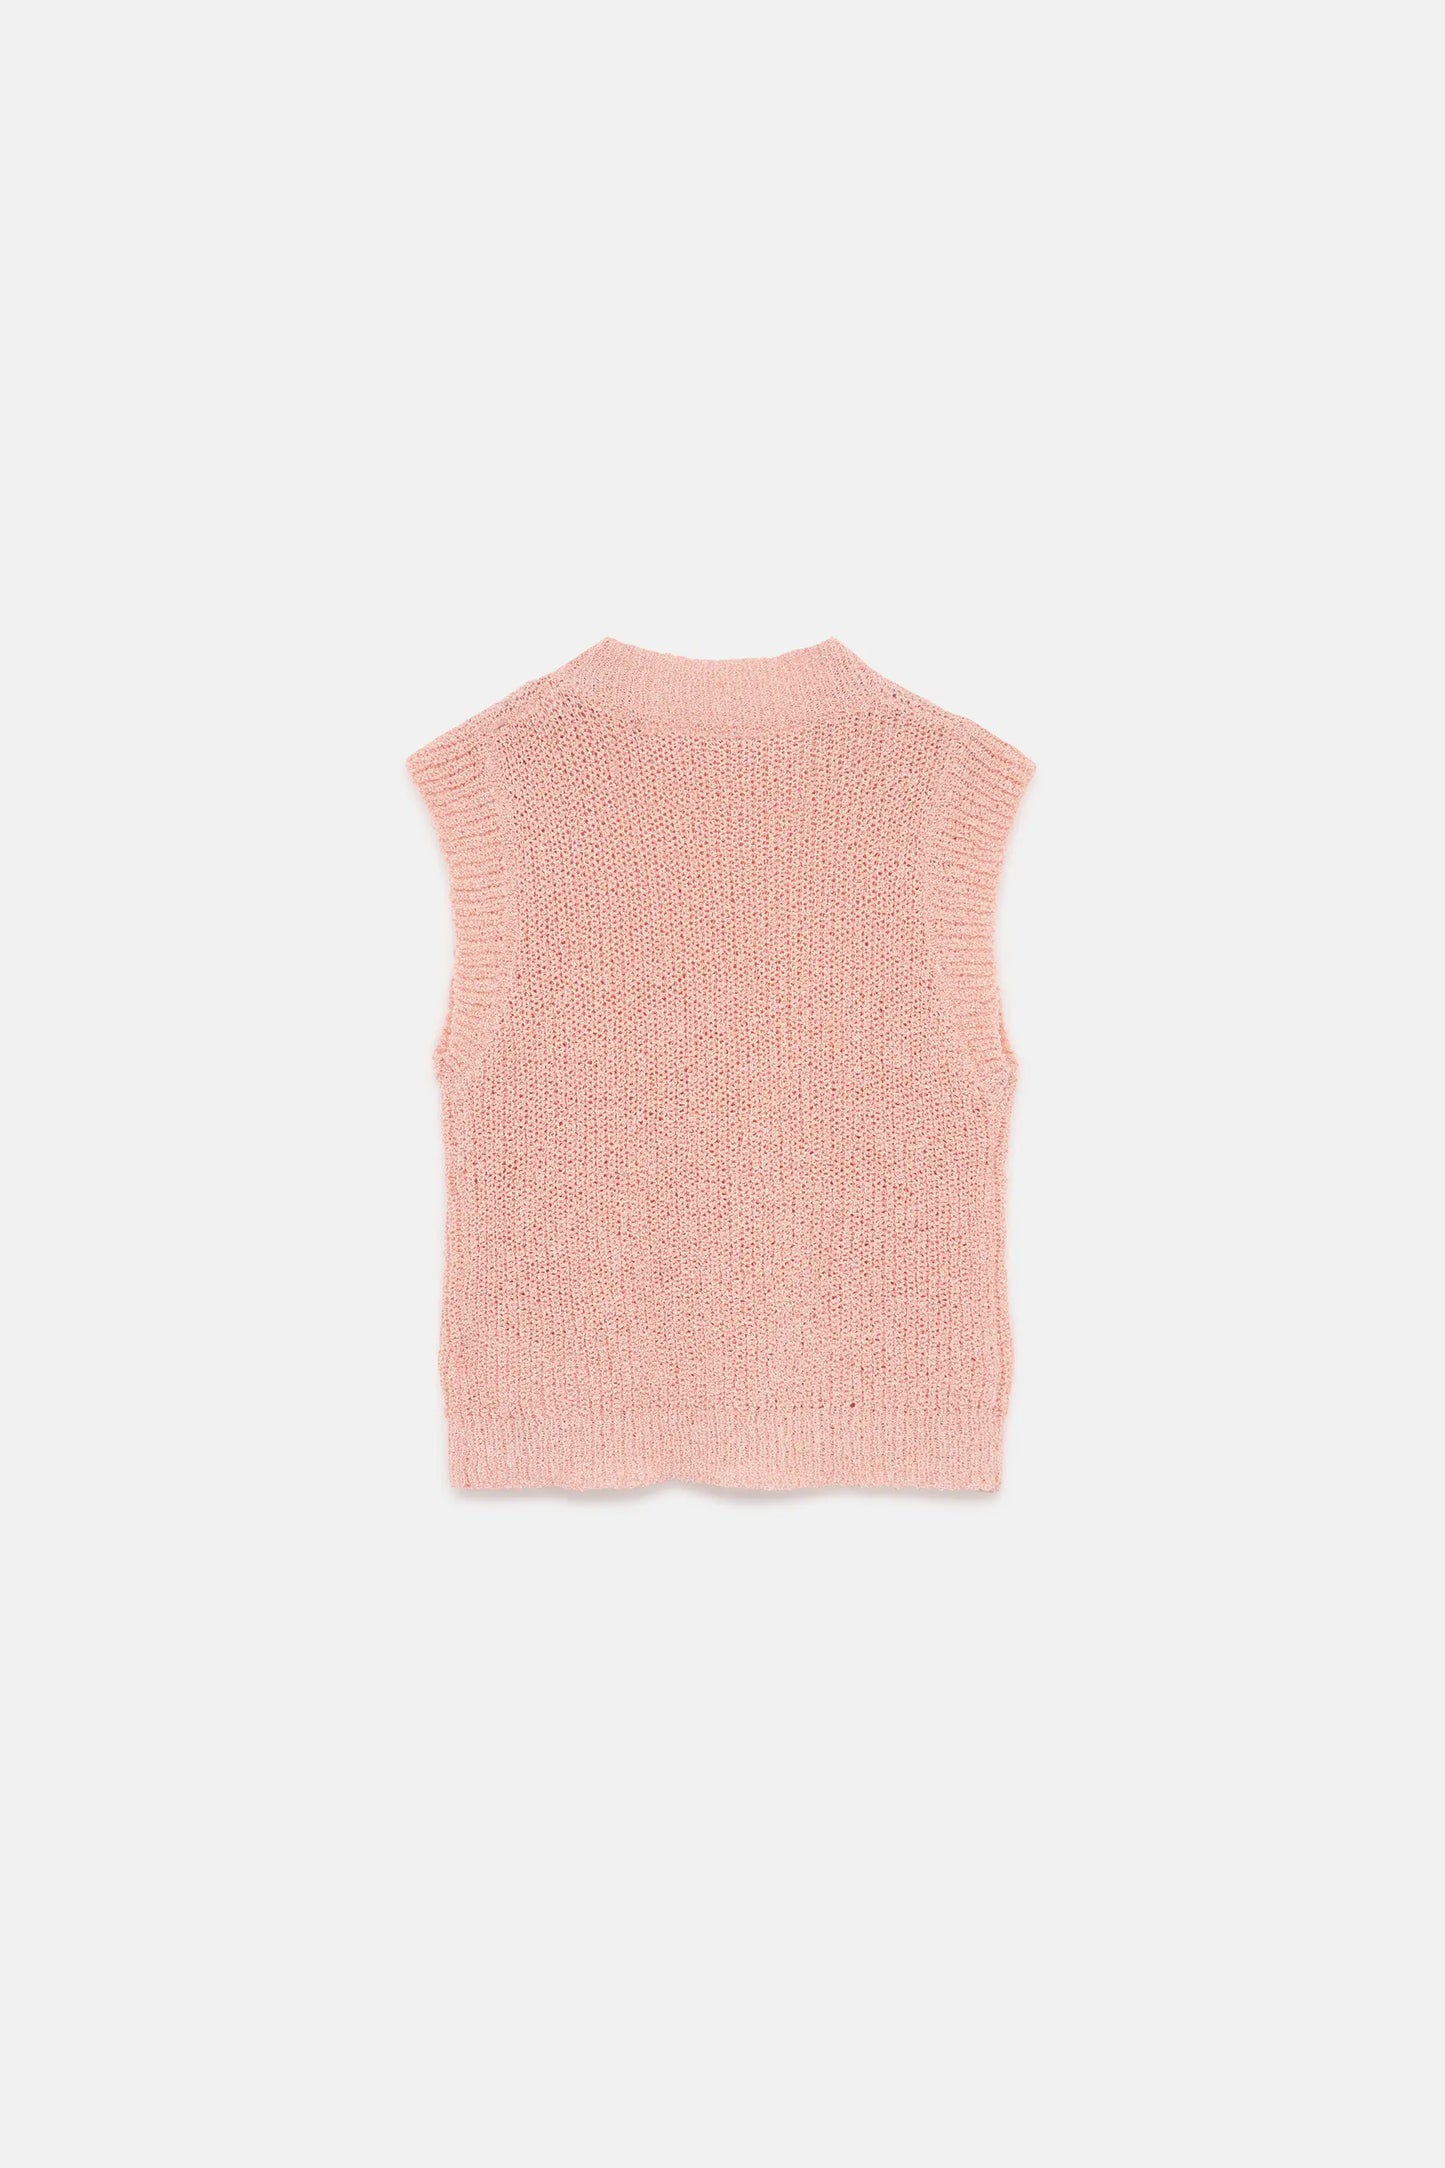 Girl's pink sleeveless top